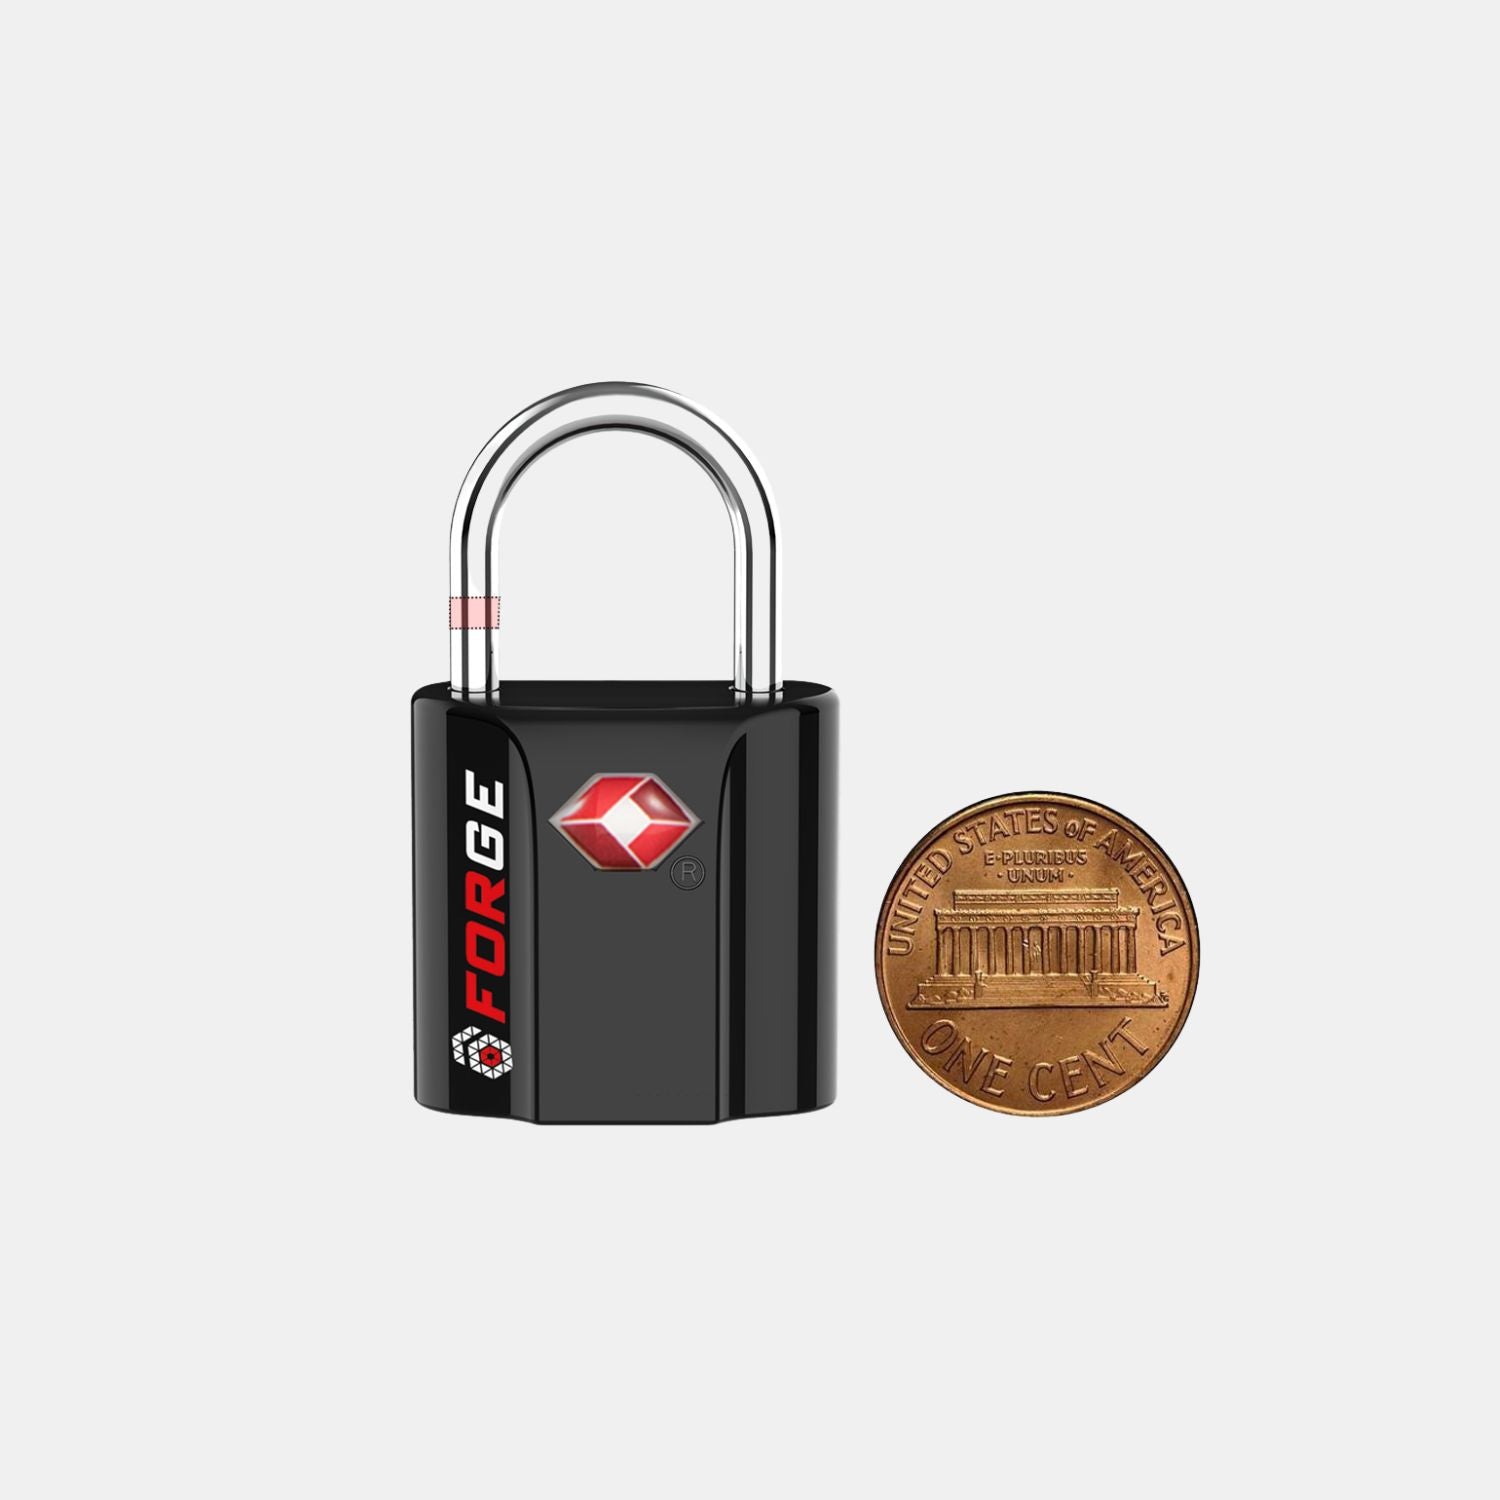 TSA Approved Dimple Key Luggage Lock - TSA006 Key, Ultra-Secure Small Size Lock. Black 6 Locks